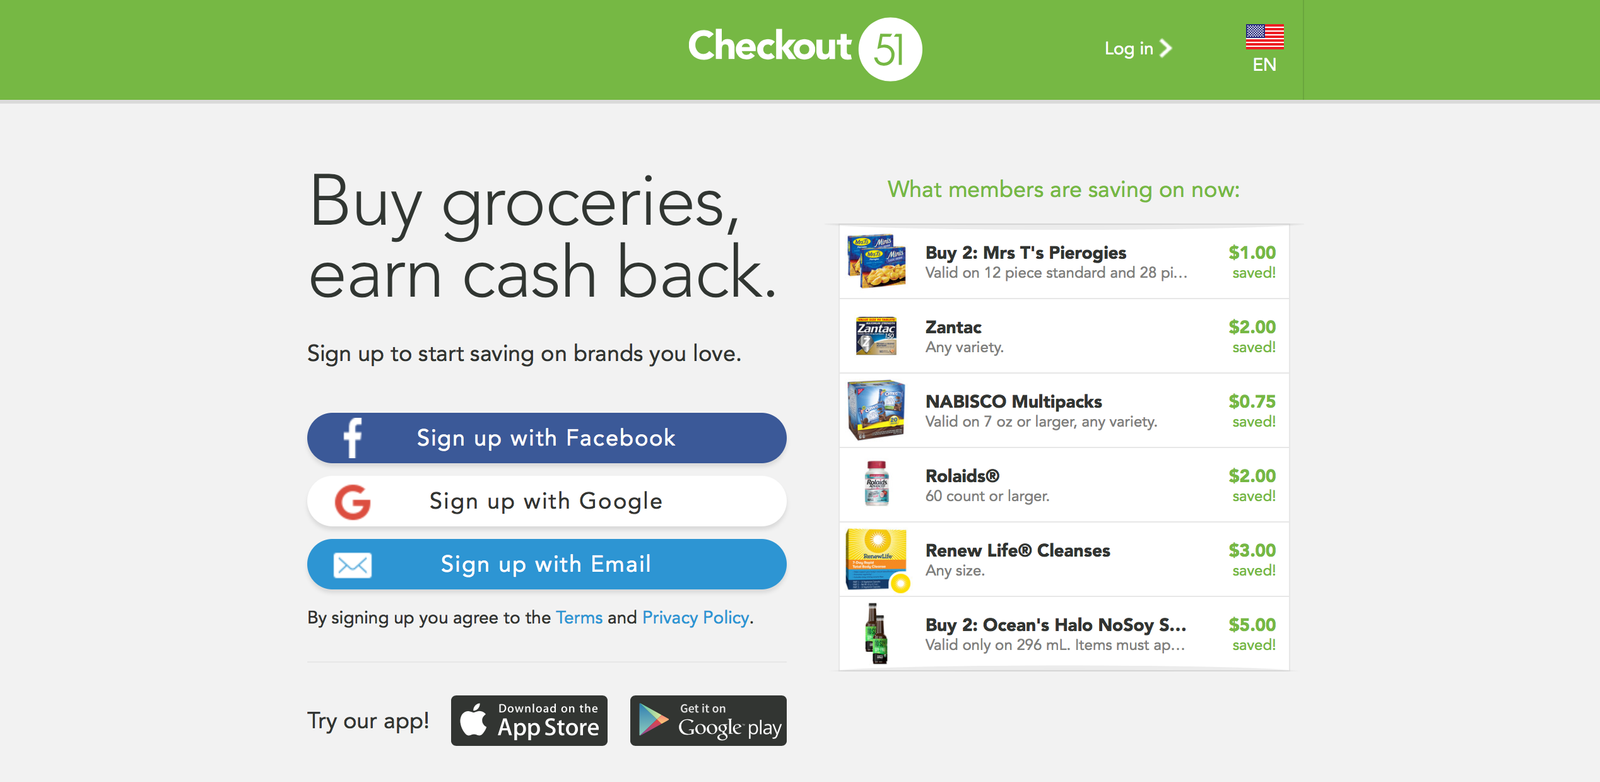 Checkout51 Cash Back App